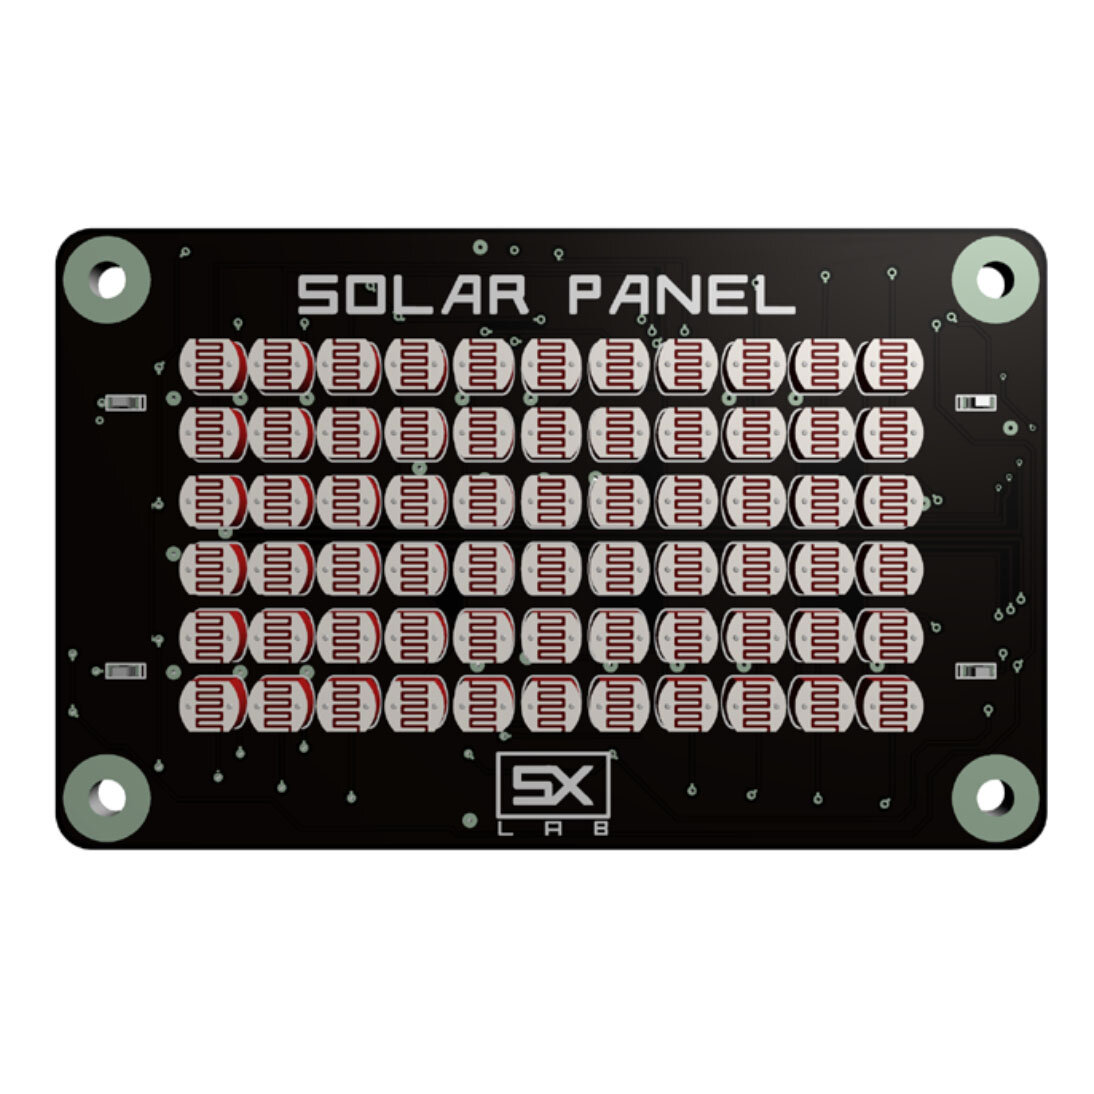 SxLab Solar Panel Credit Card Series